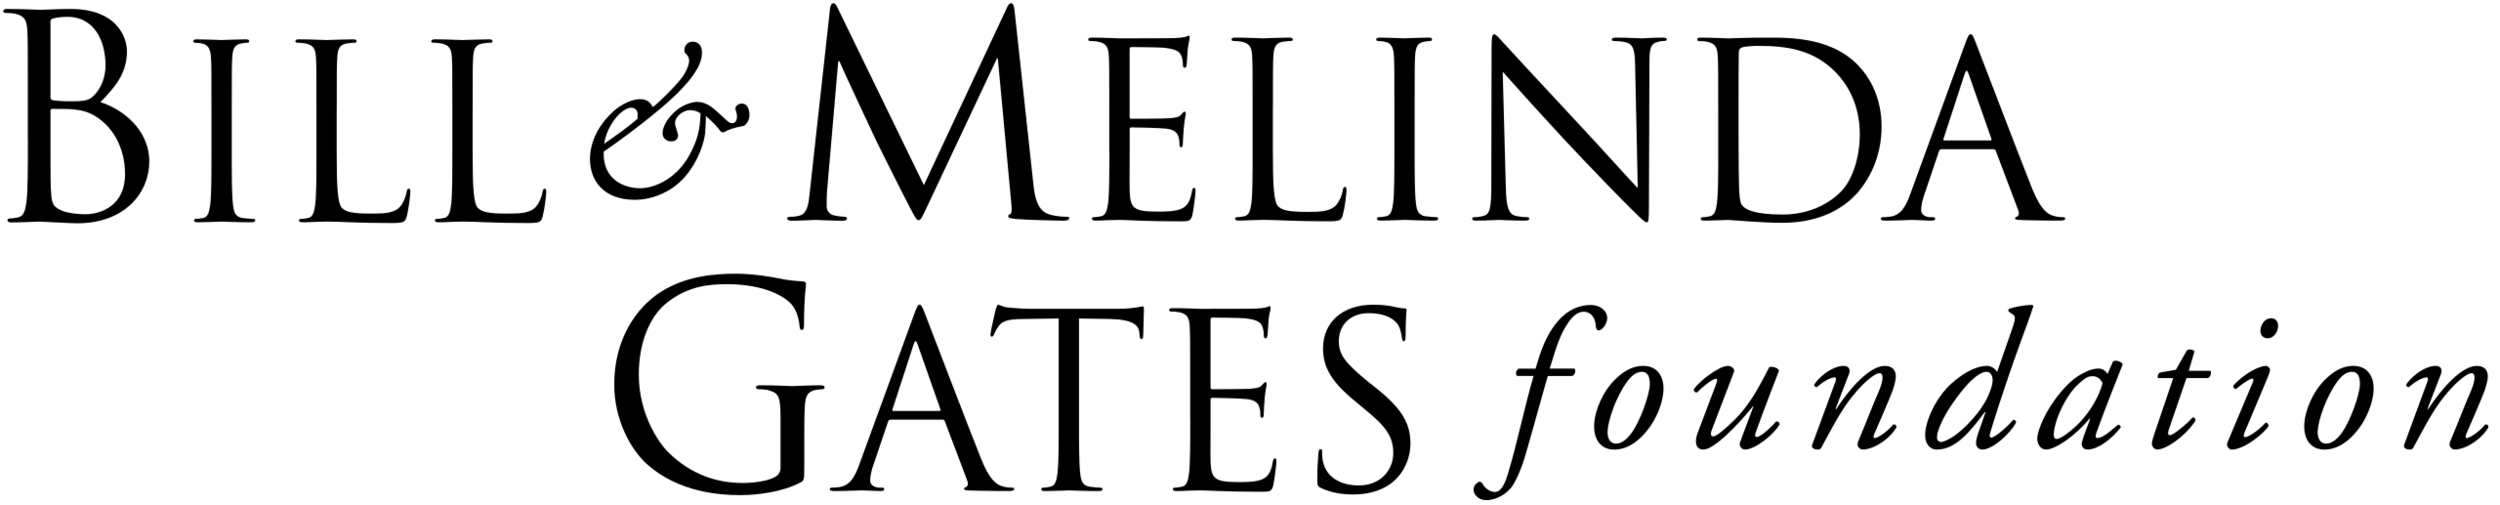 Gates Foundation logo.png